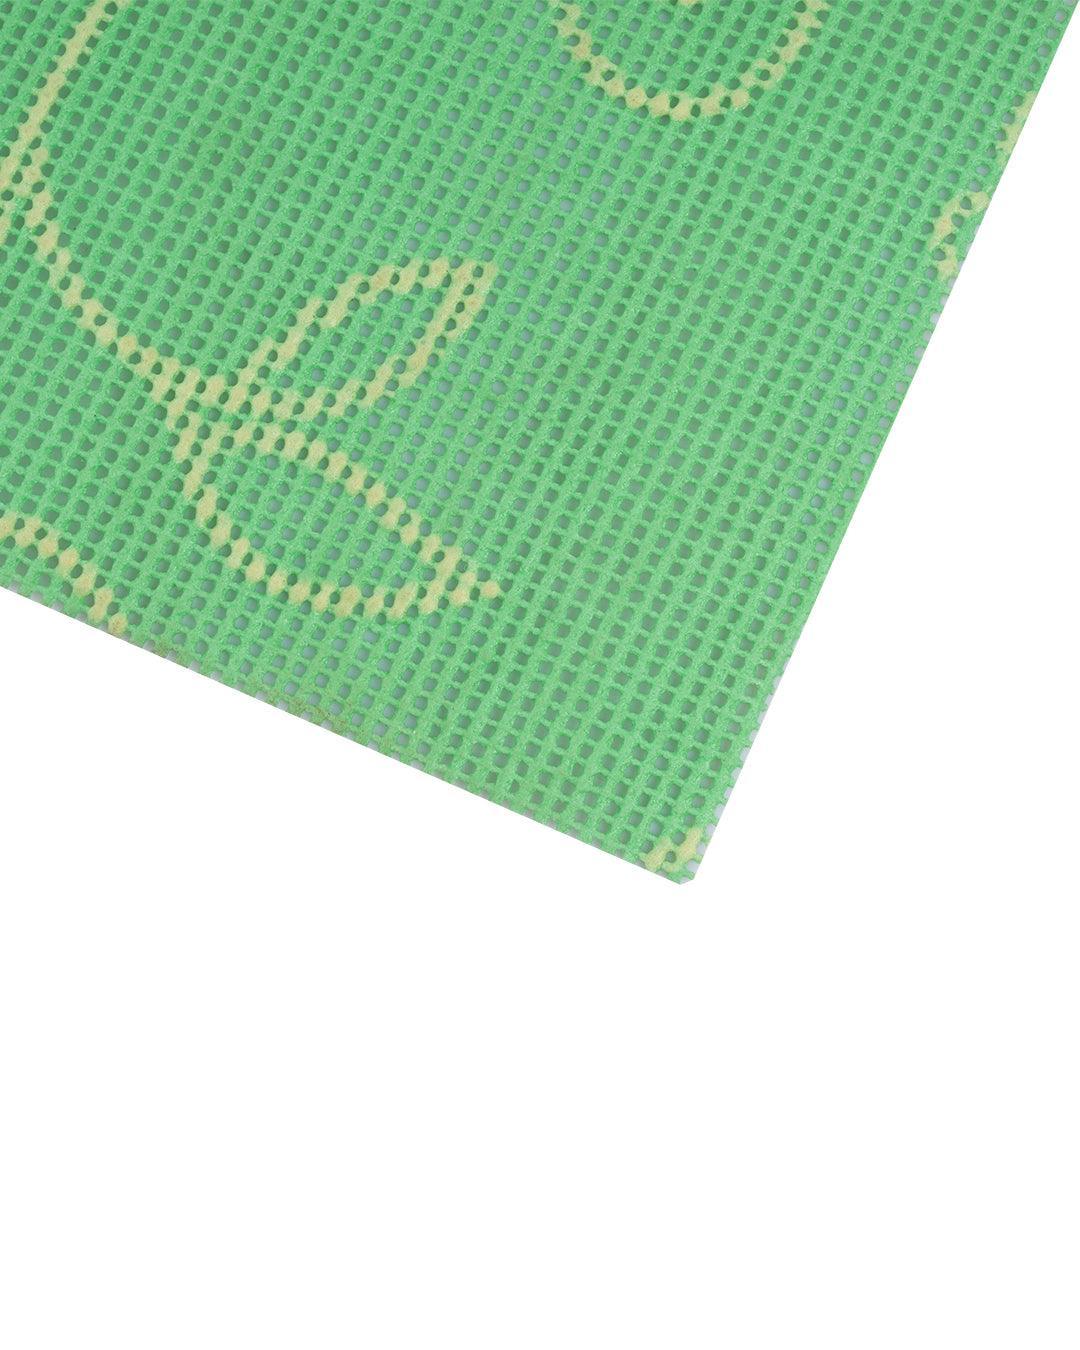 Anti Skid Mat, for Kitchen, Green Colour, Foam - MARKET 99